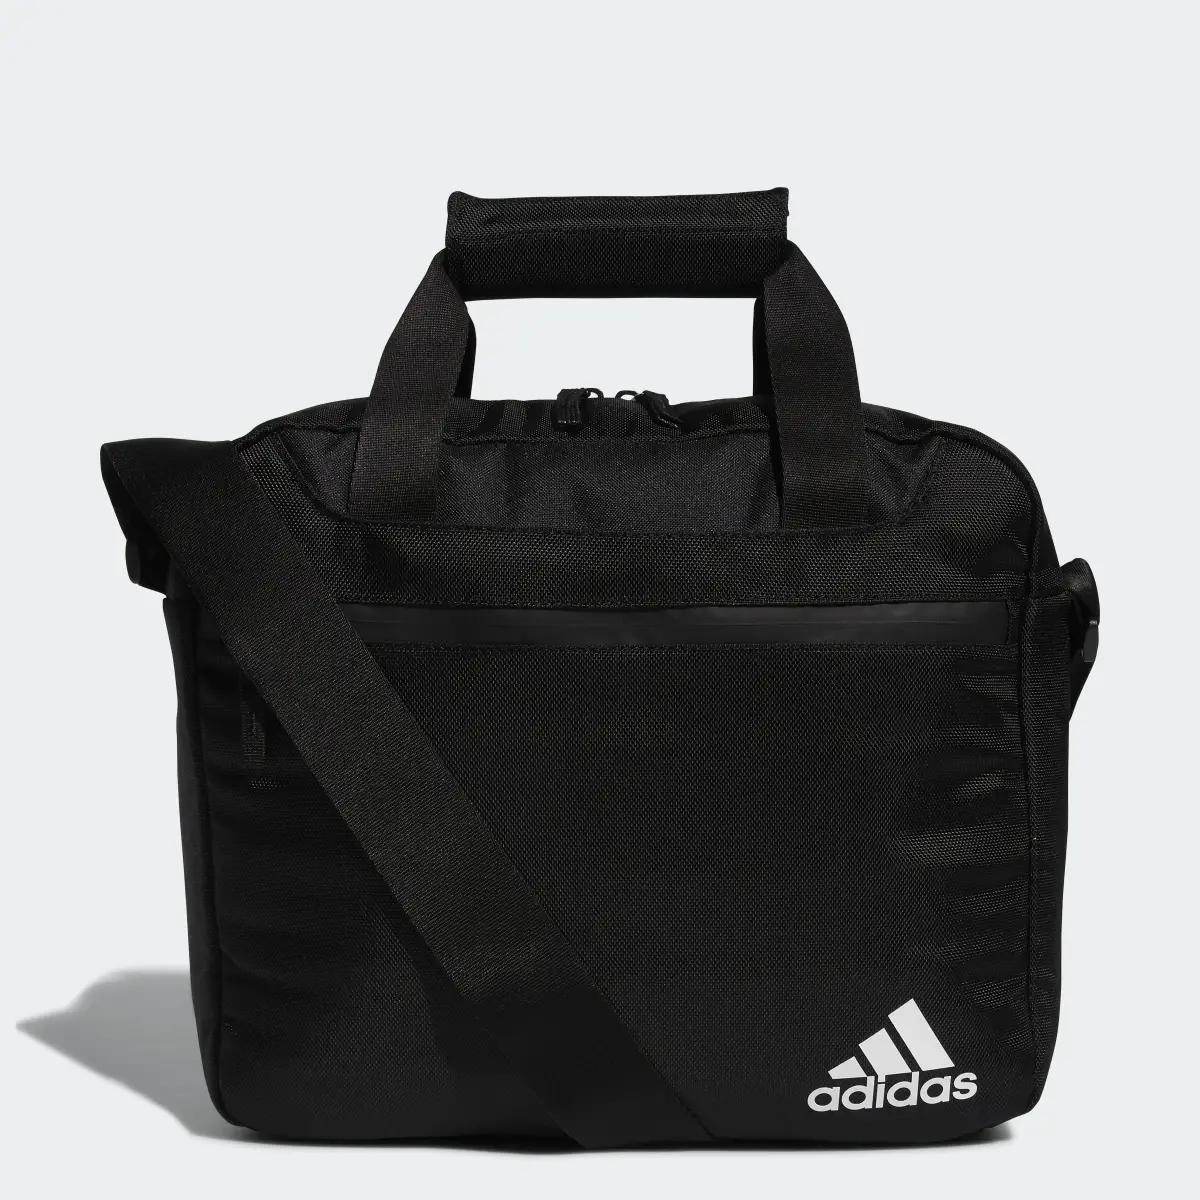 Adidas Stadium Messenger Bag. 1